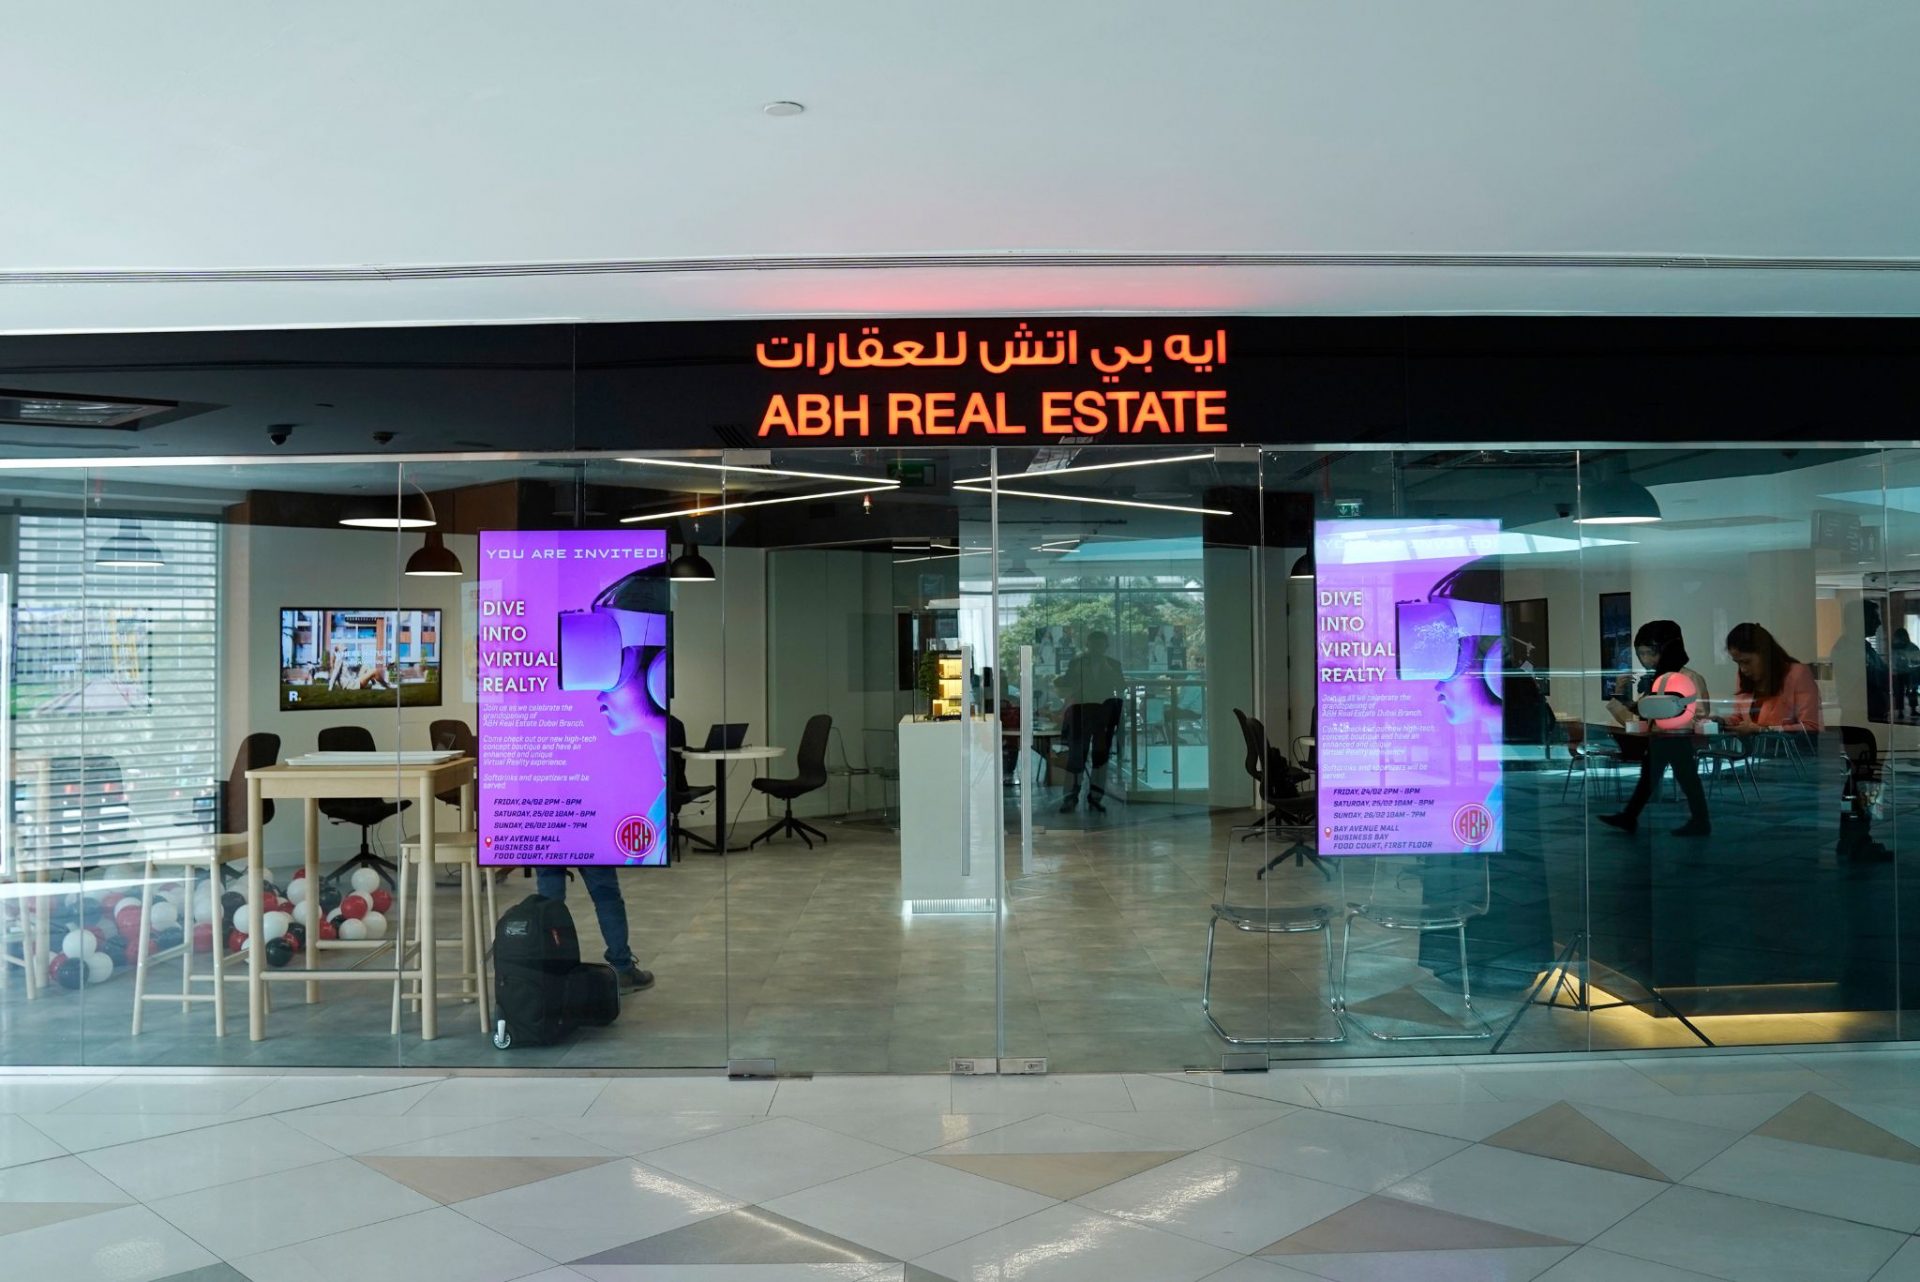 ABH Real Estate